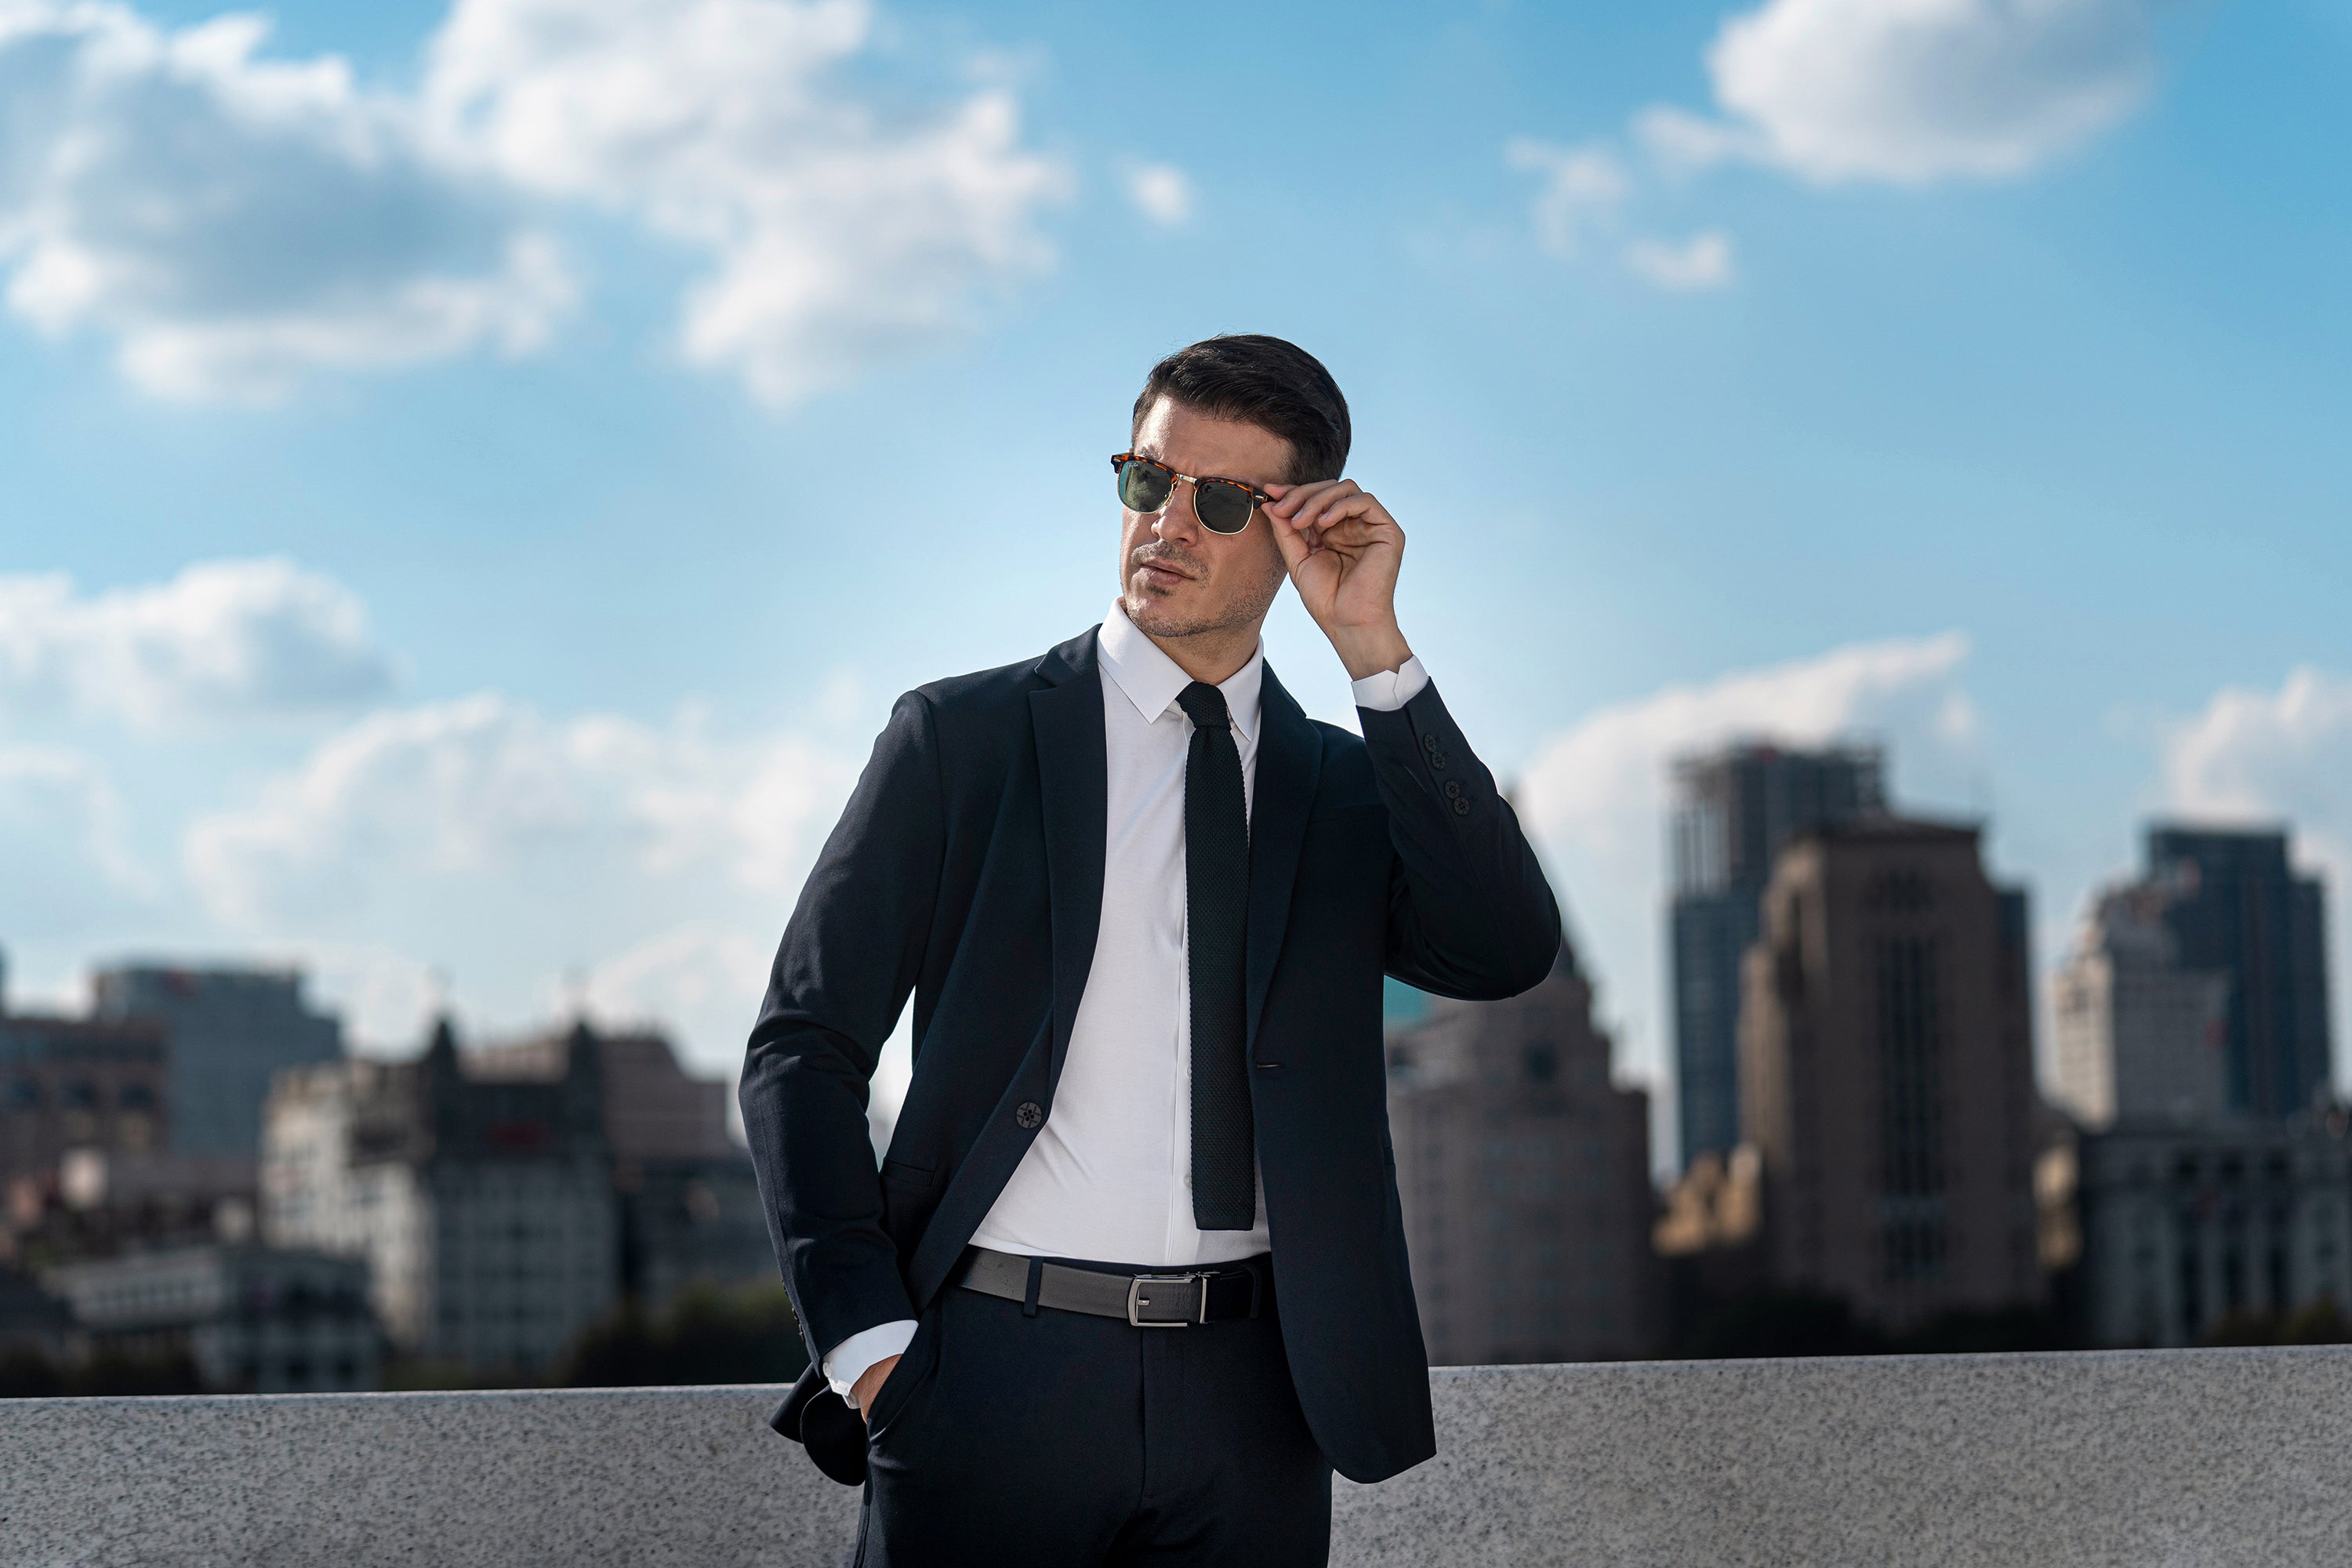 Smart Business Suits for Men